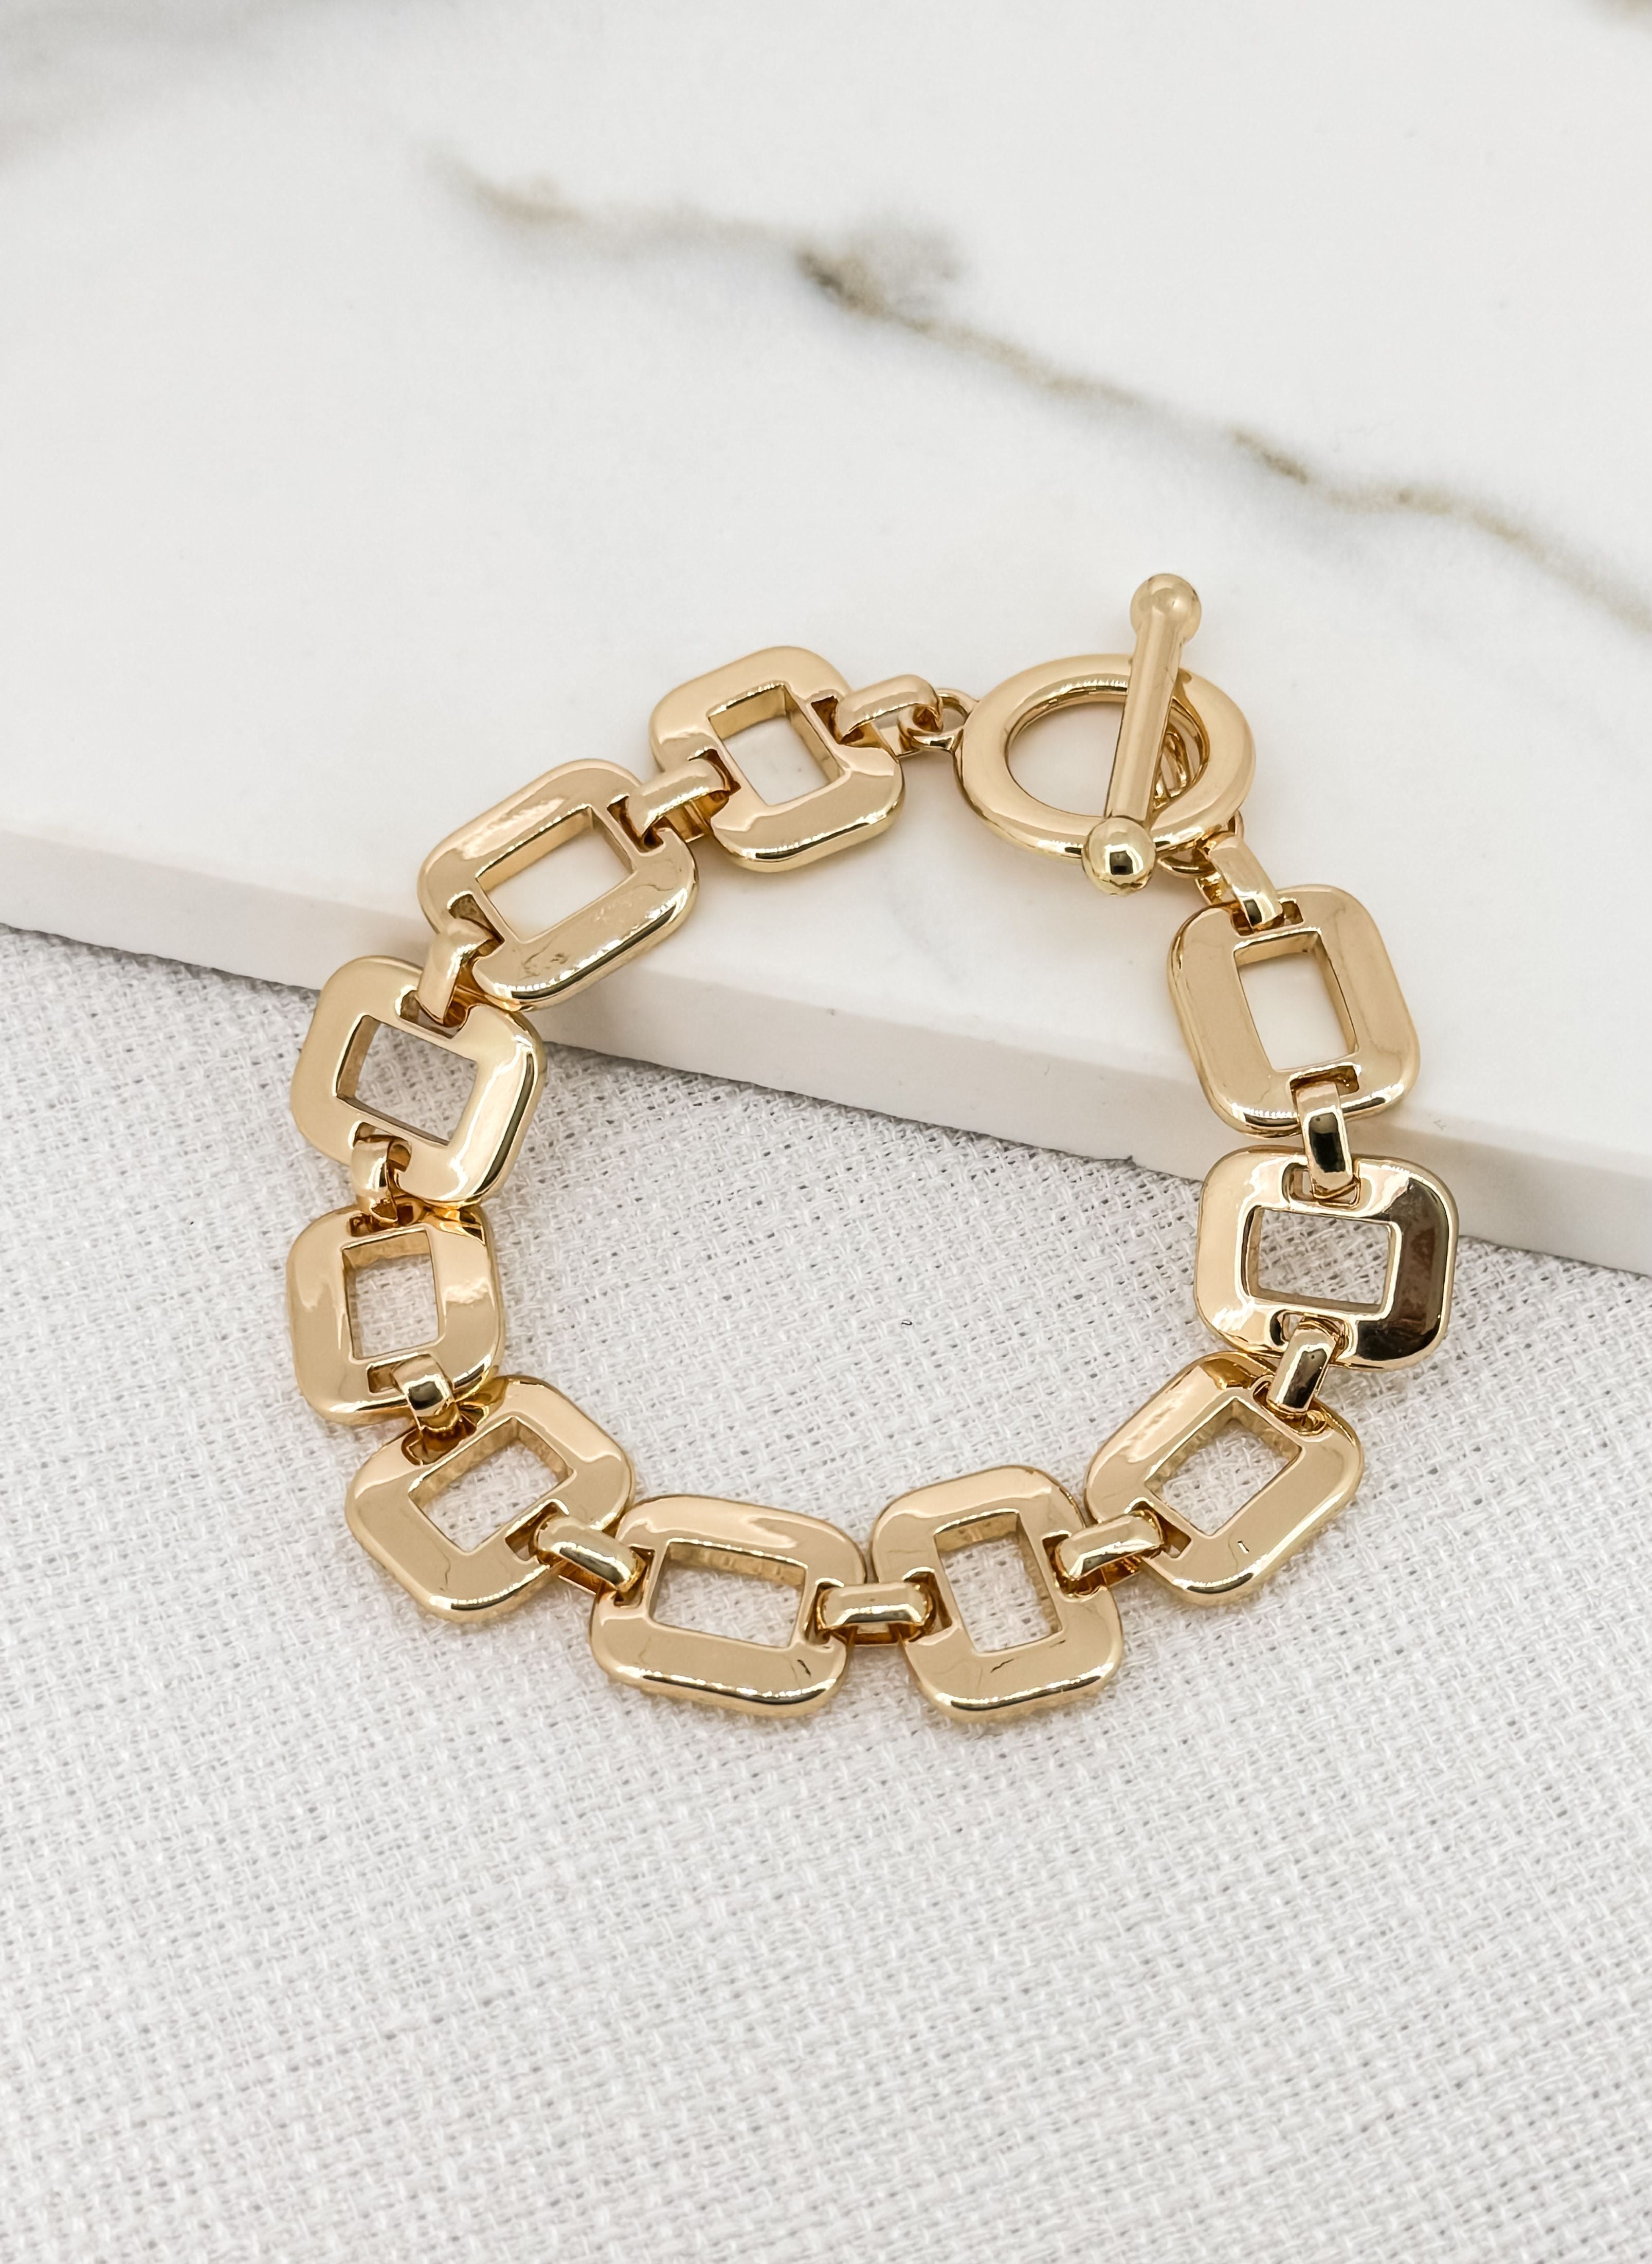 Chain Bracelet in Gold